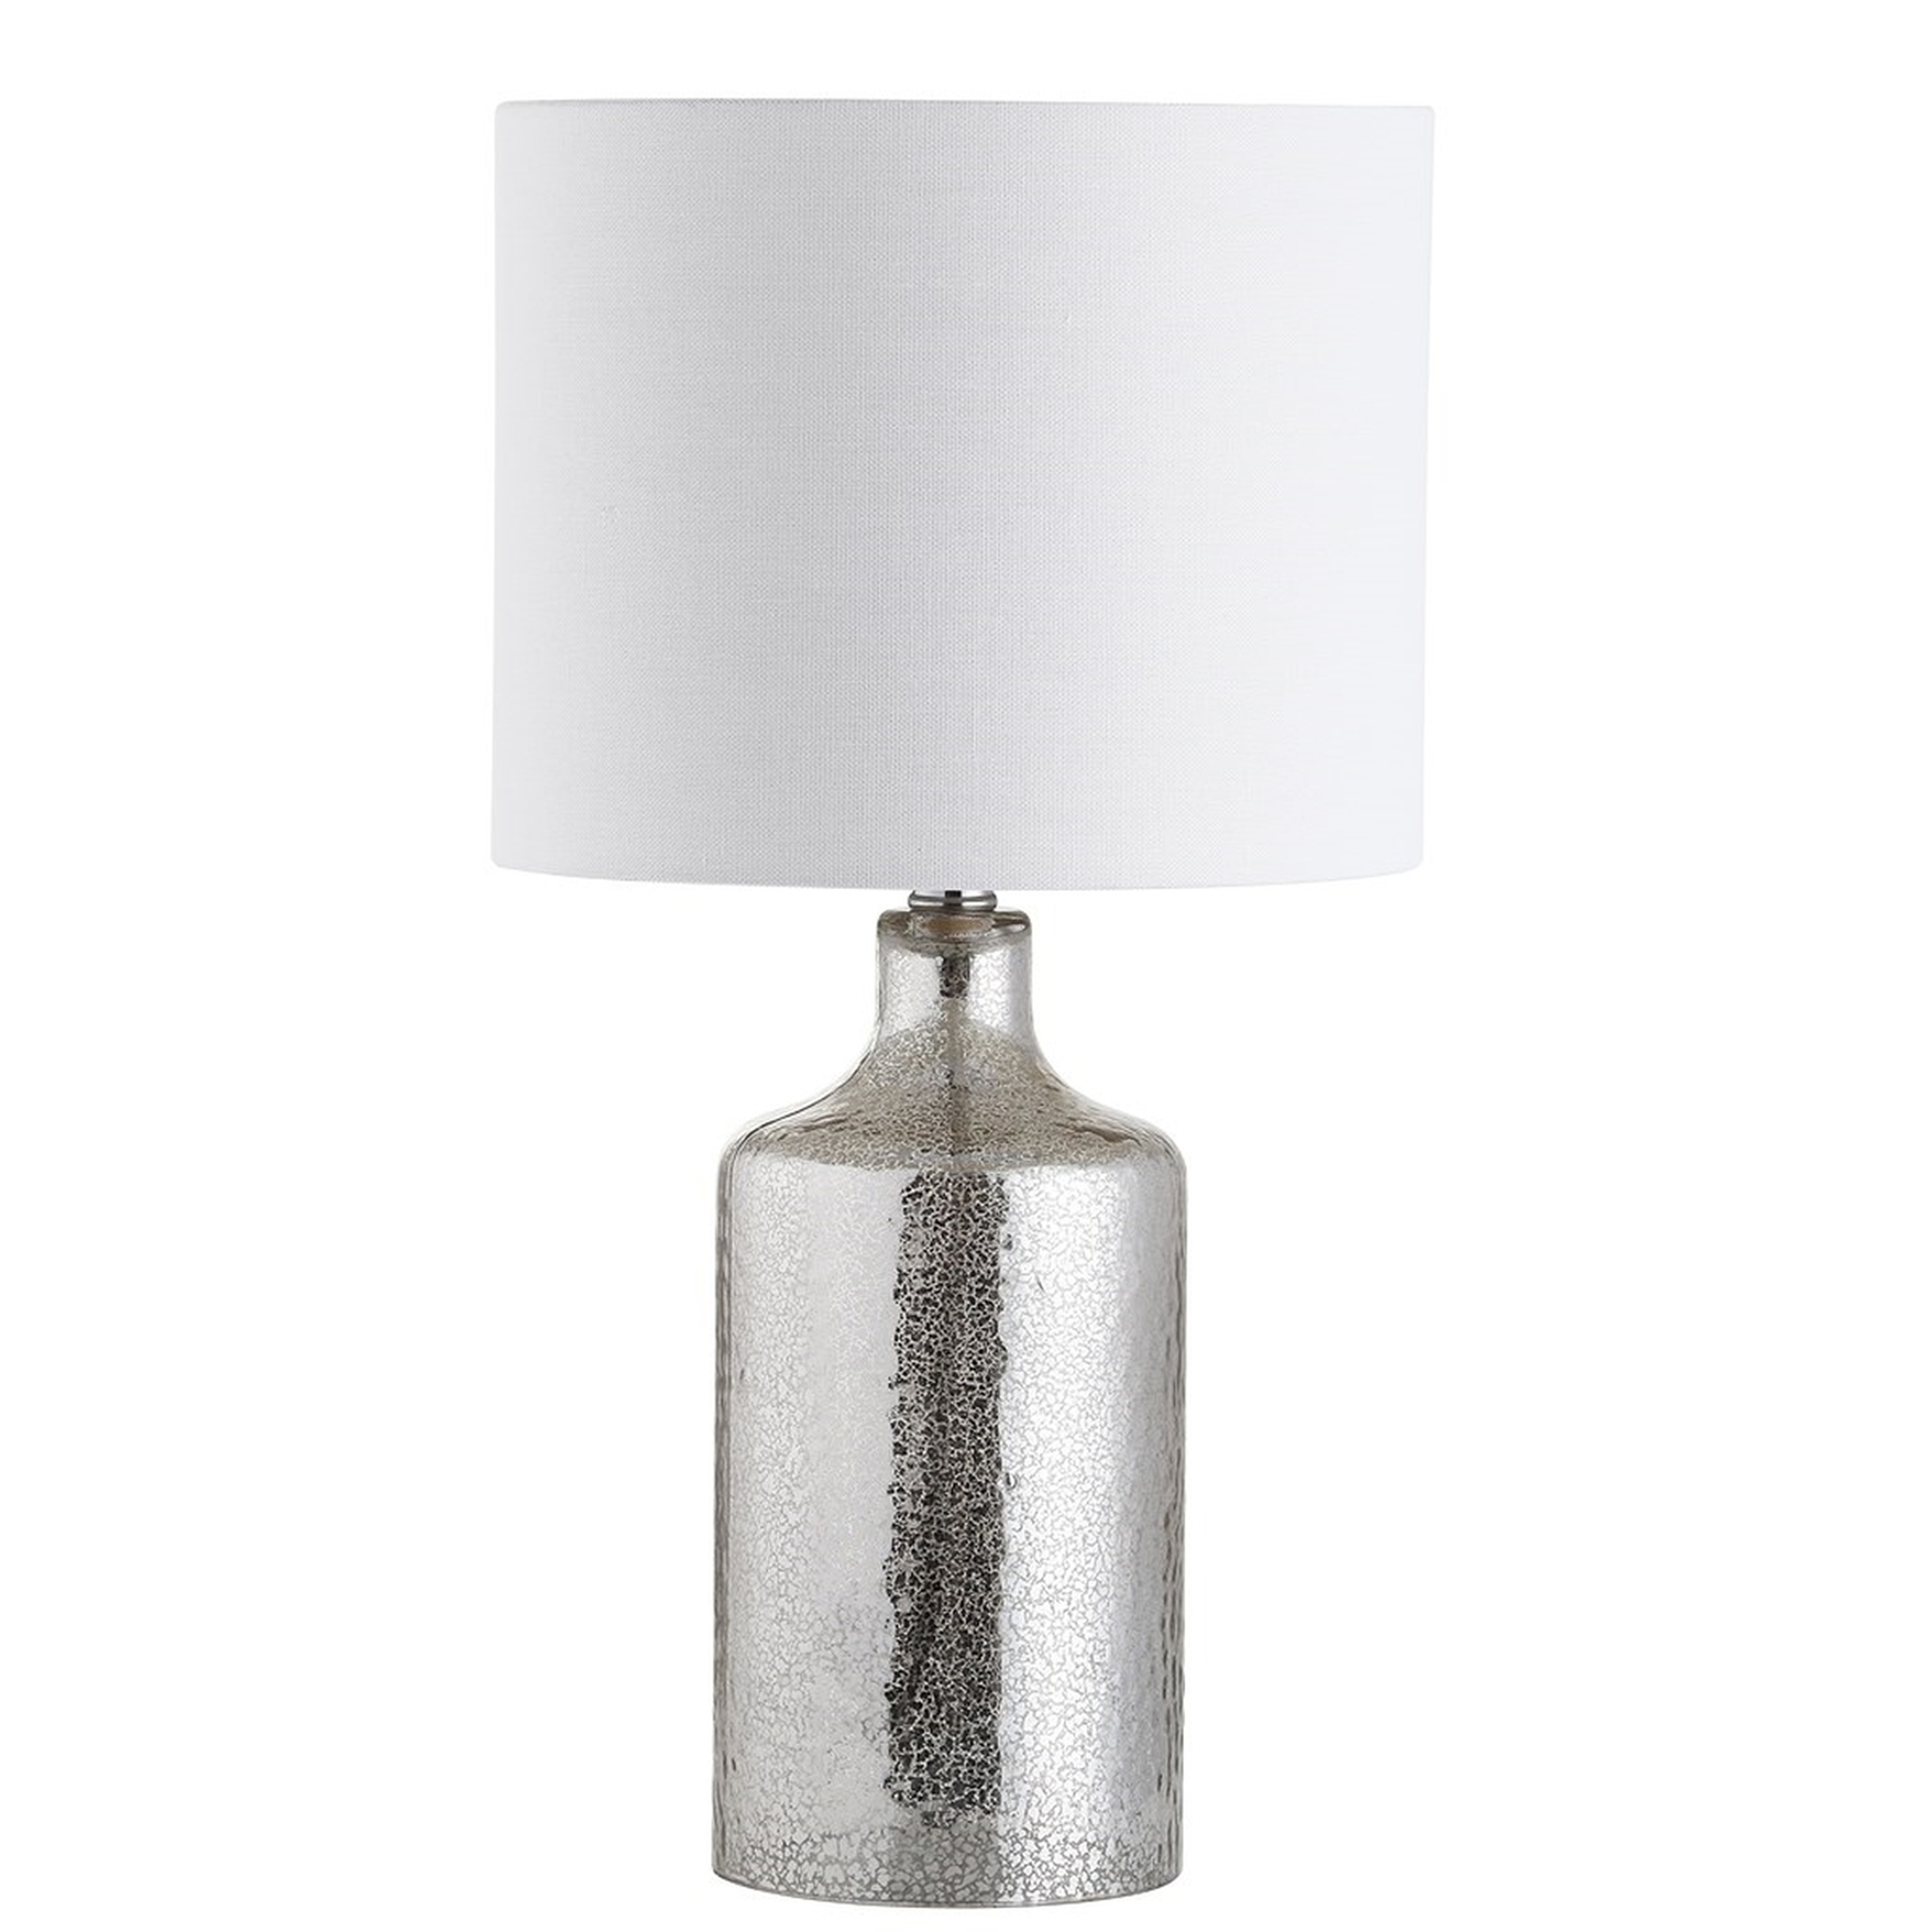 Danaris Table Lamp - Silver/Ivory - Arlo Home - Arlo Home